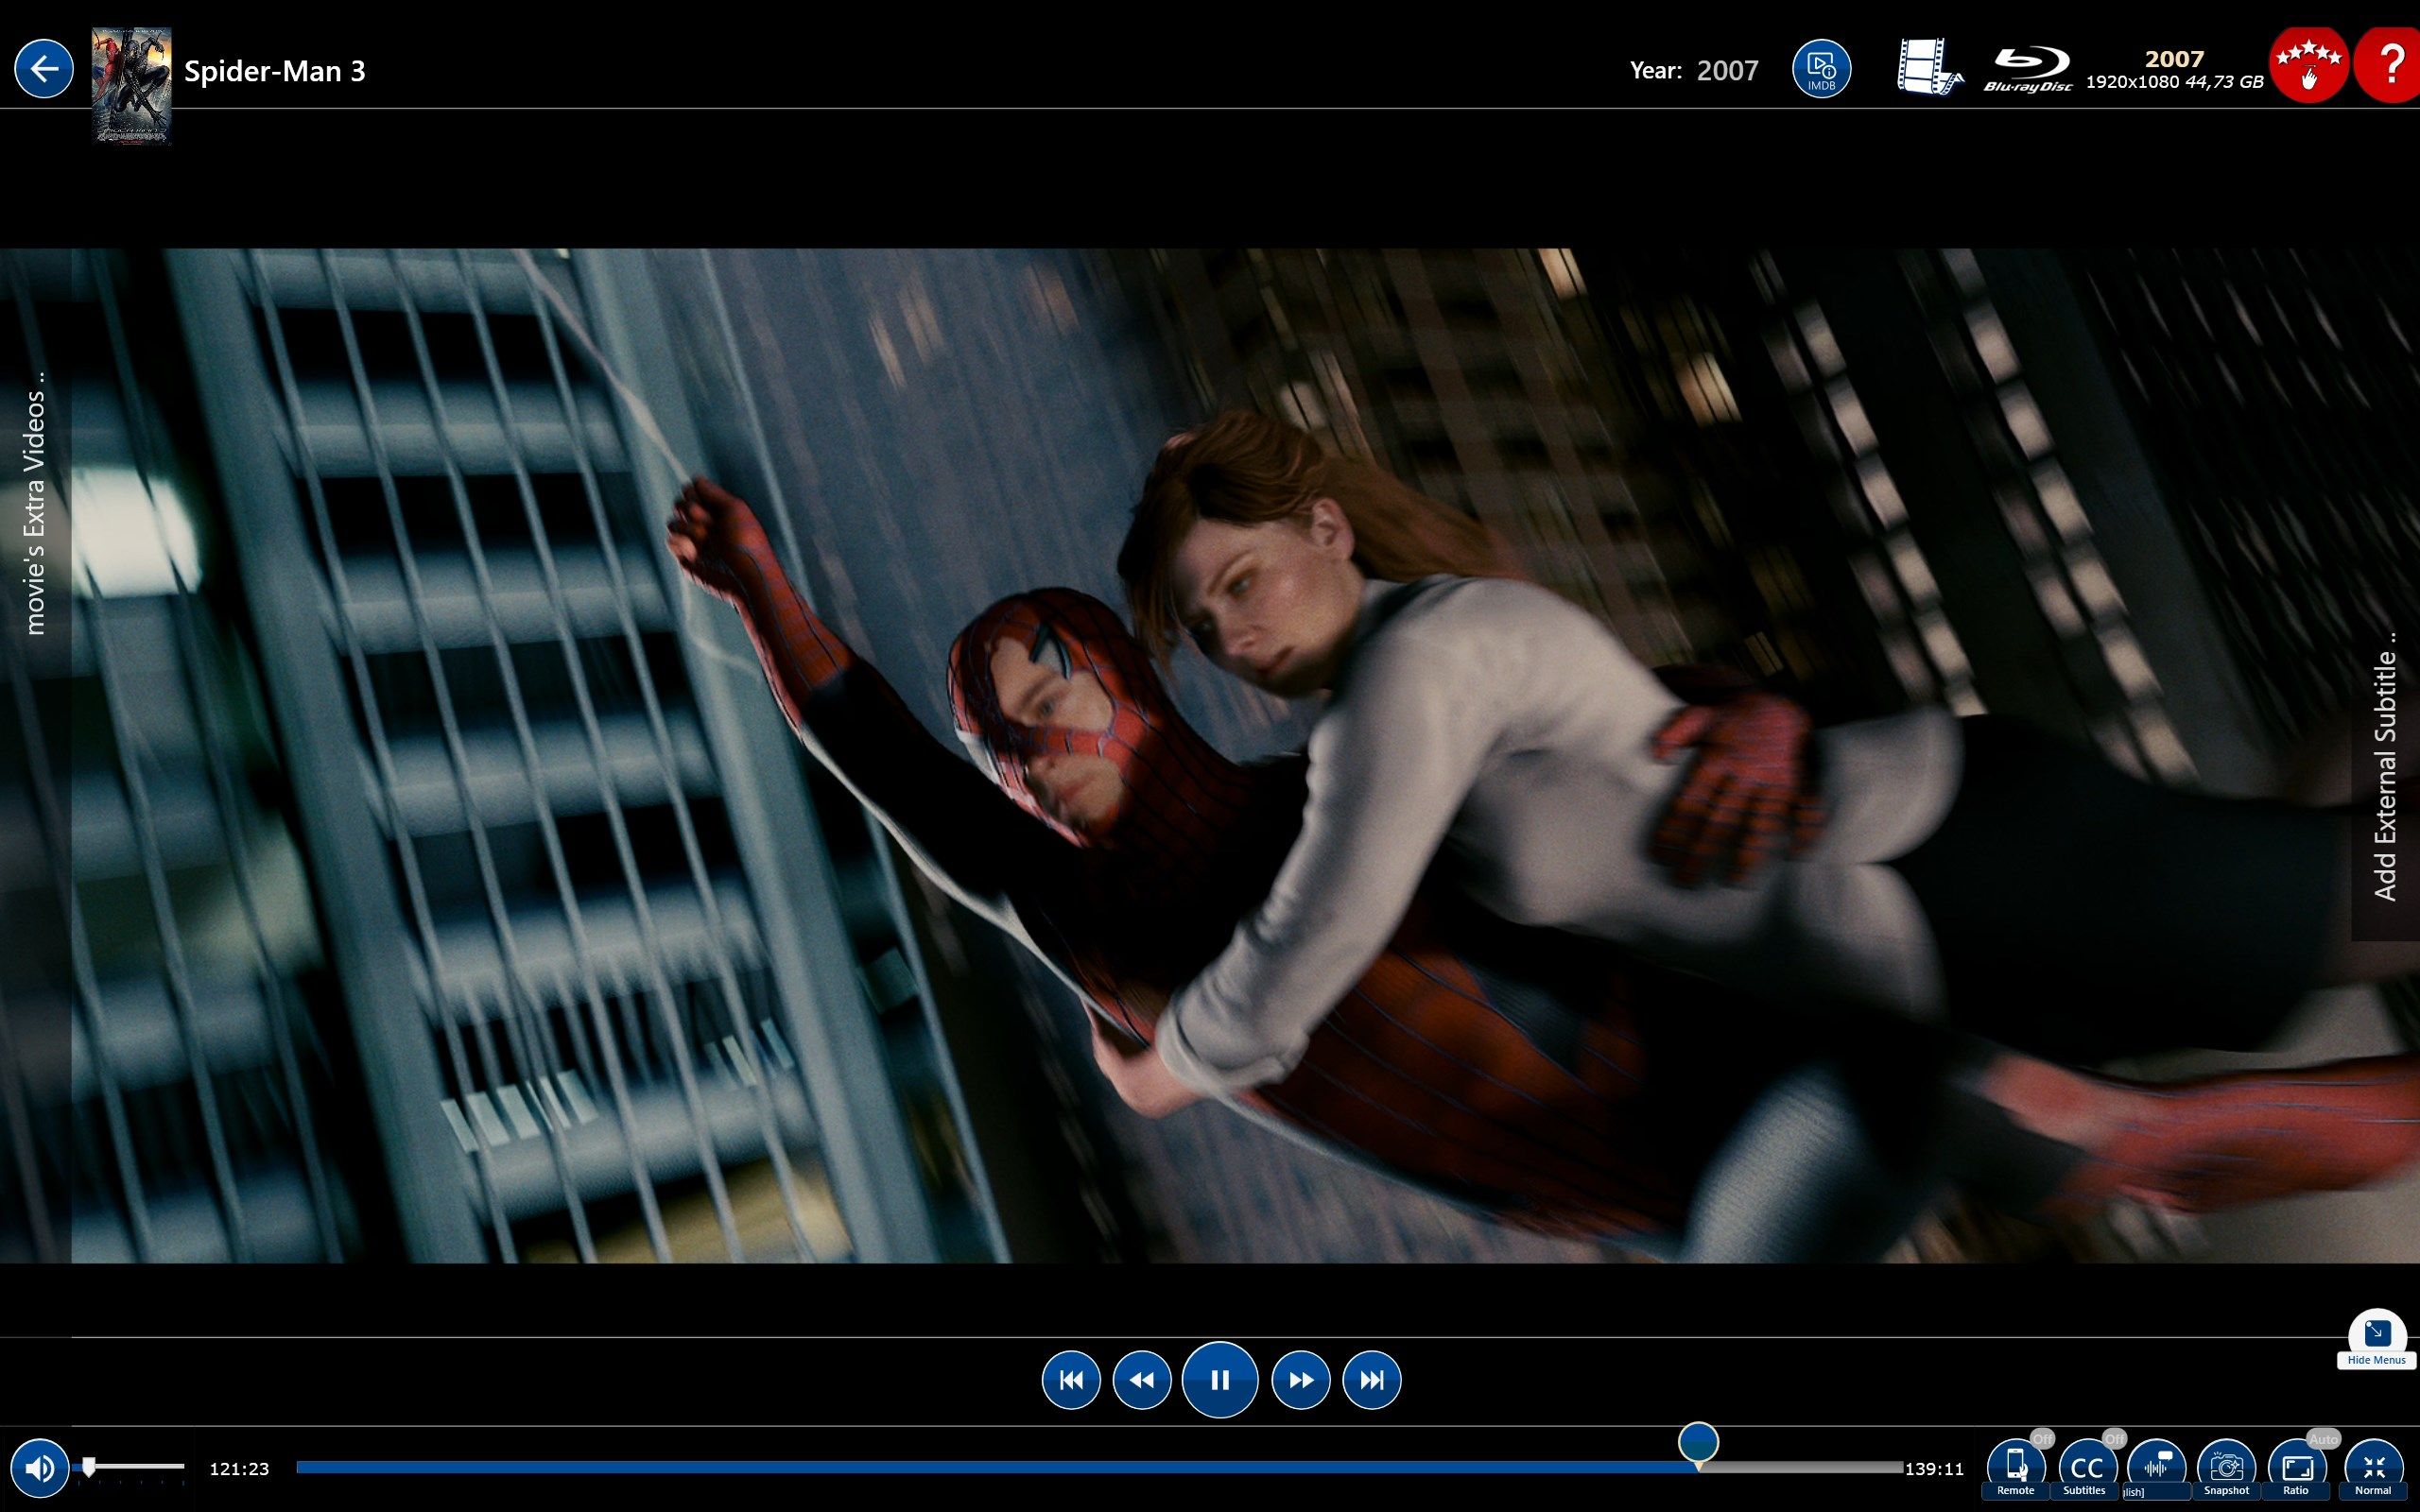 [7 of 8] Blu-Ray playback: Play Full Screen!